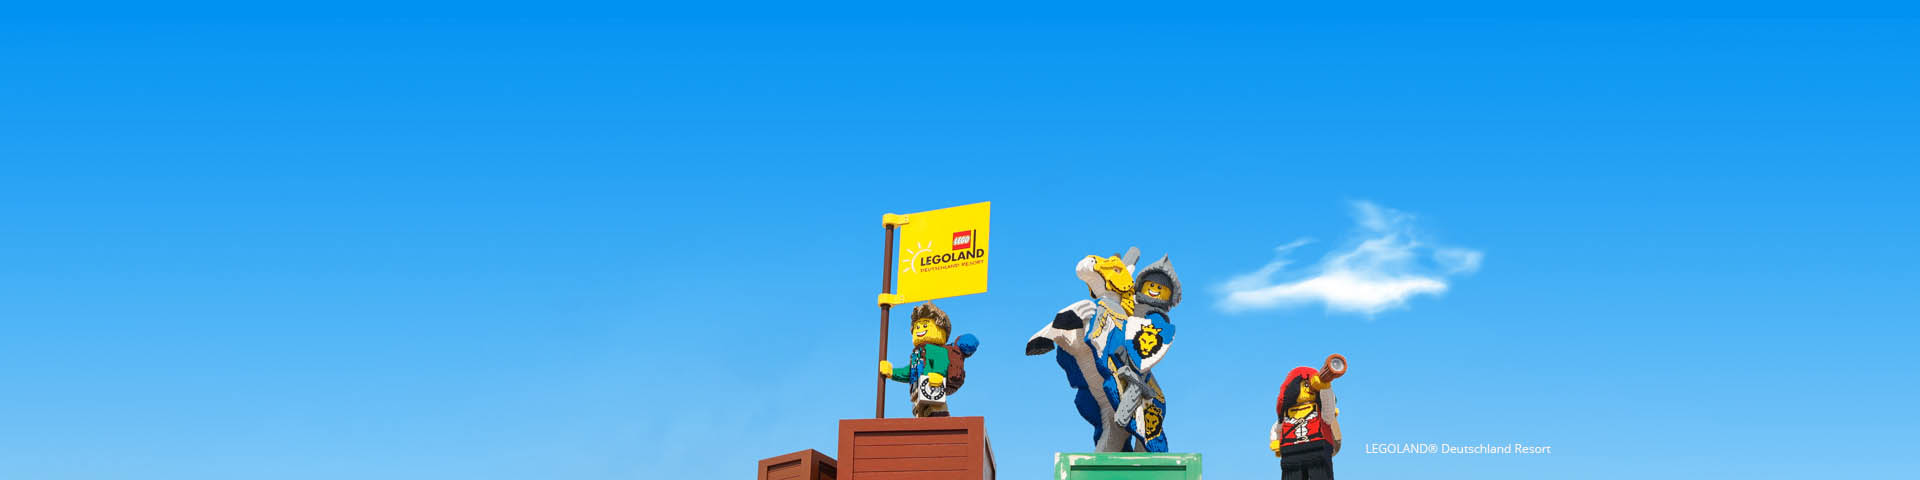 Lego poppetjes op een lego-kasteel